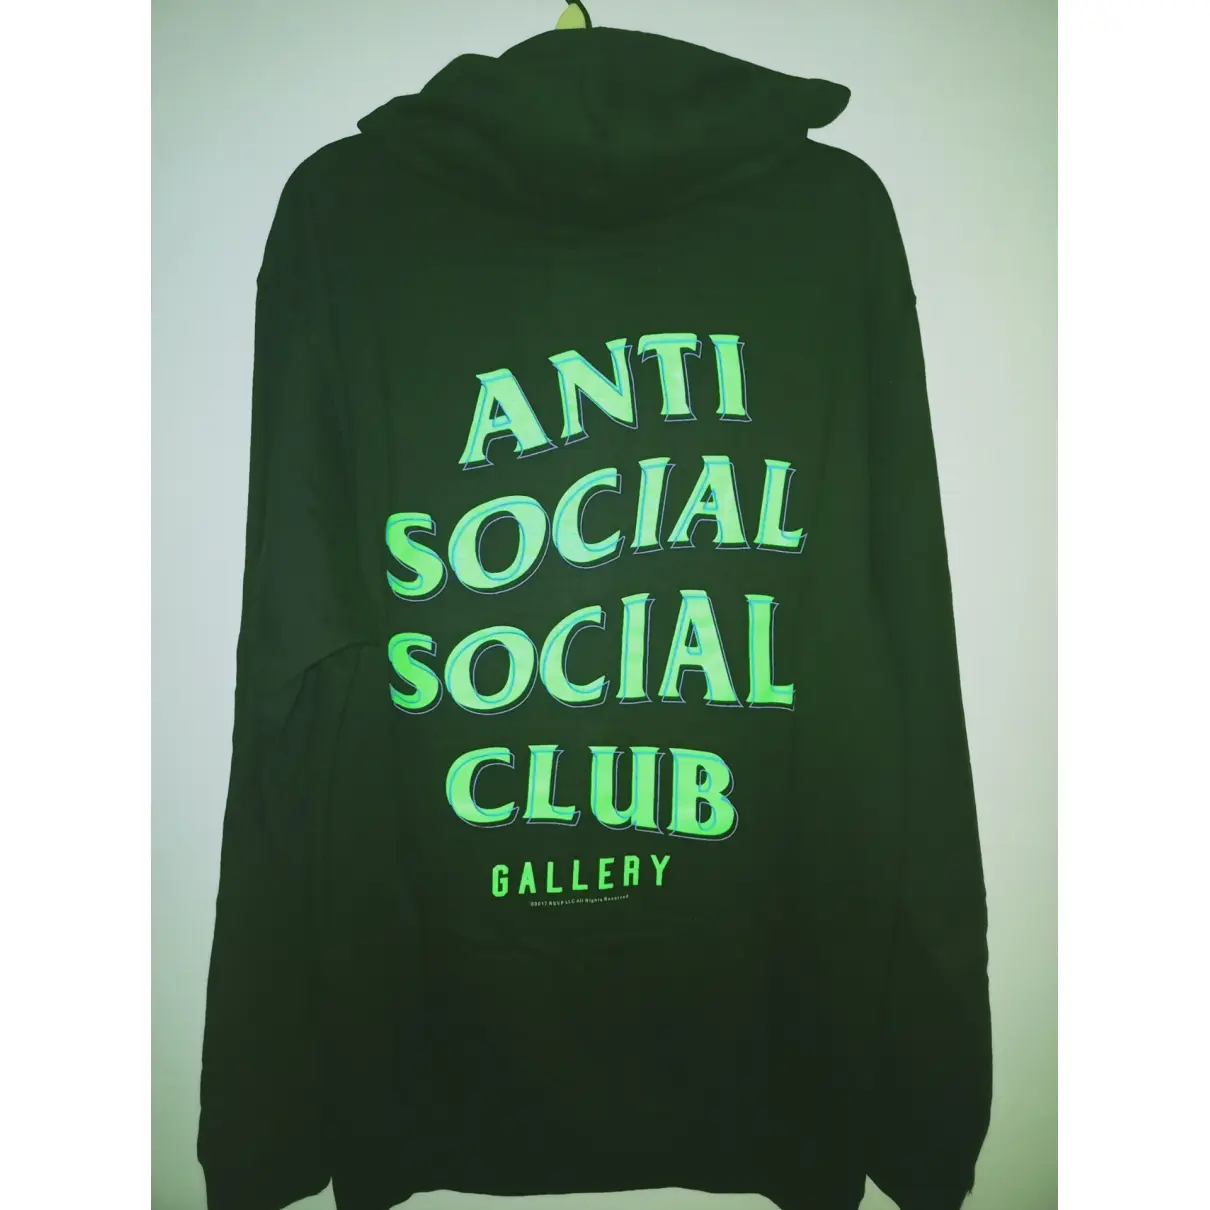 Buy Anti Social Social Club Knitwear & sweatshirt online